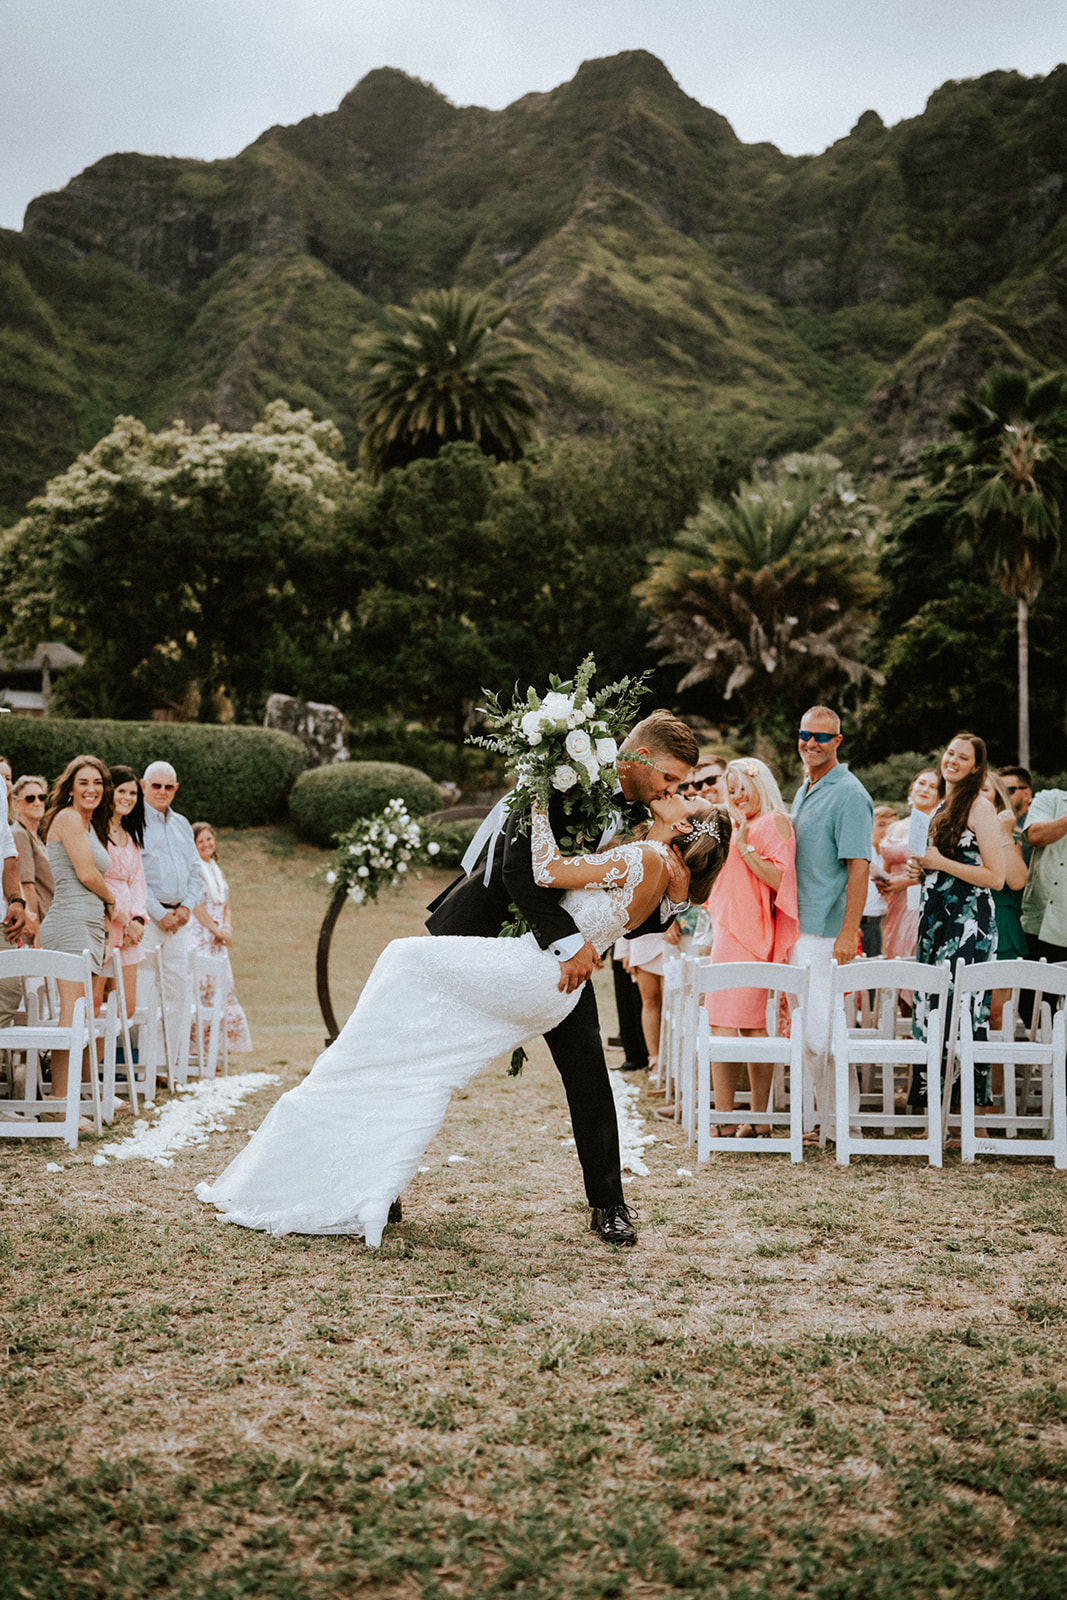 A couple who got hitched at Kualoa Ranch's Paliku Gardens in Hawaii